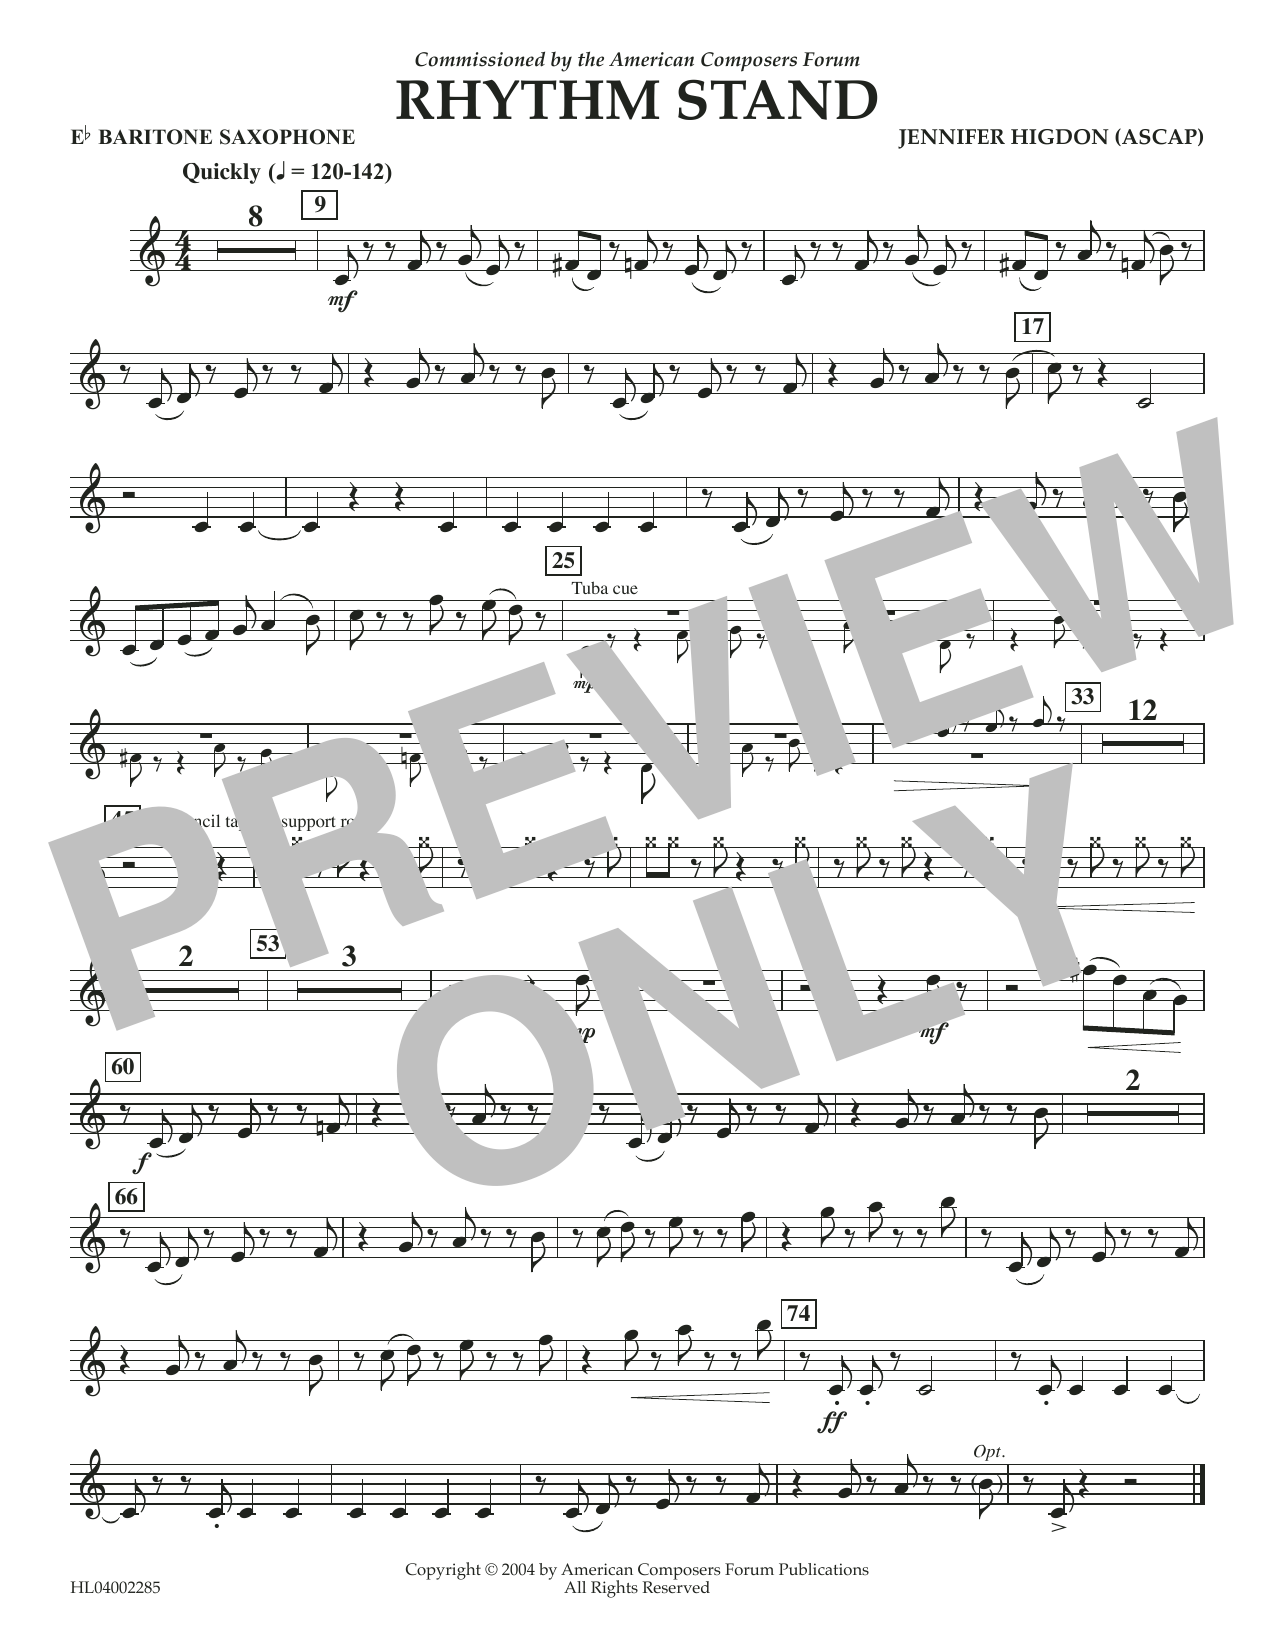 Jennifer Higdon Rhythm Stand - Eb Baritone Saxophone Sheet Music Notes & Chords for Concert Band - Download or Print PDF